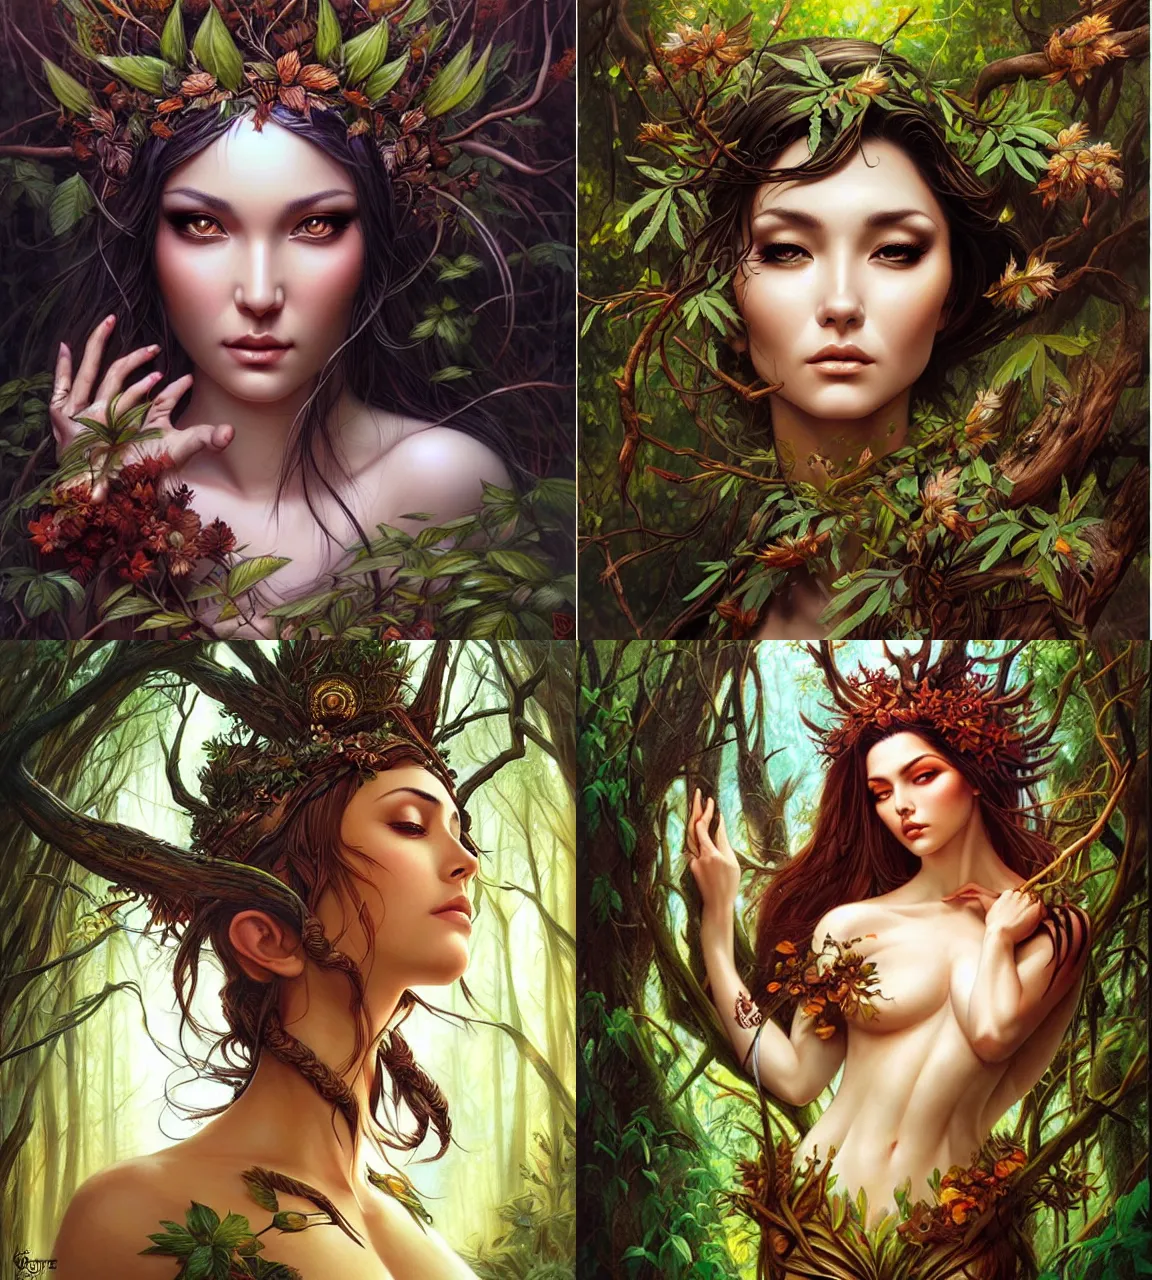 Prompt: goddess of the forest, drawn by artgerm, digital artwork by karol bak and rhads